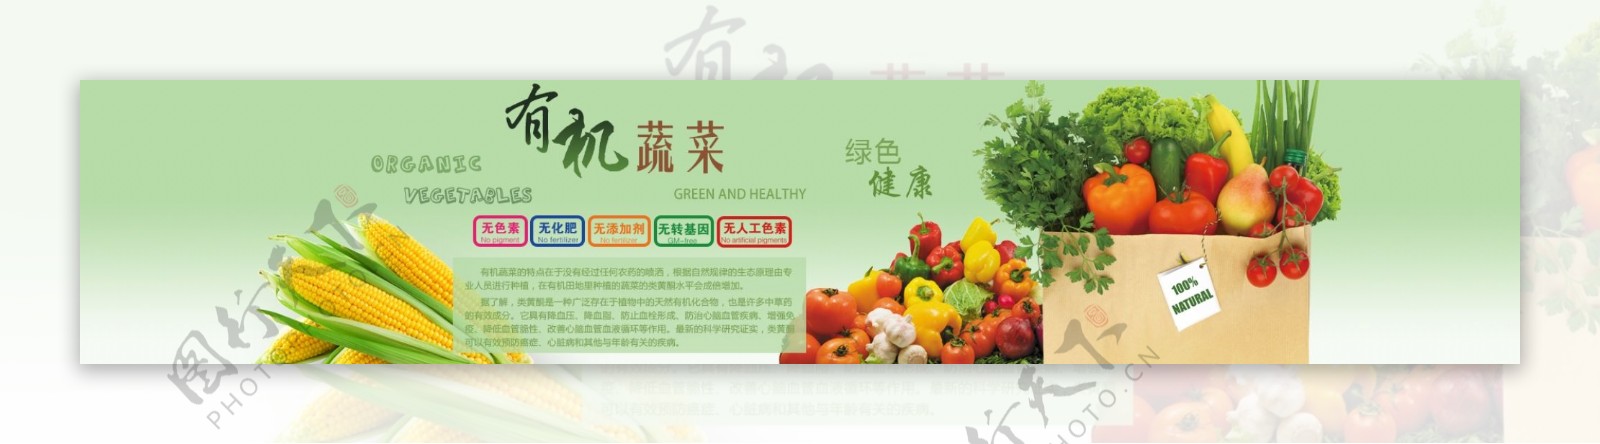 绿色蔬菜有机蔬菜网页banner